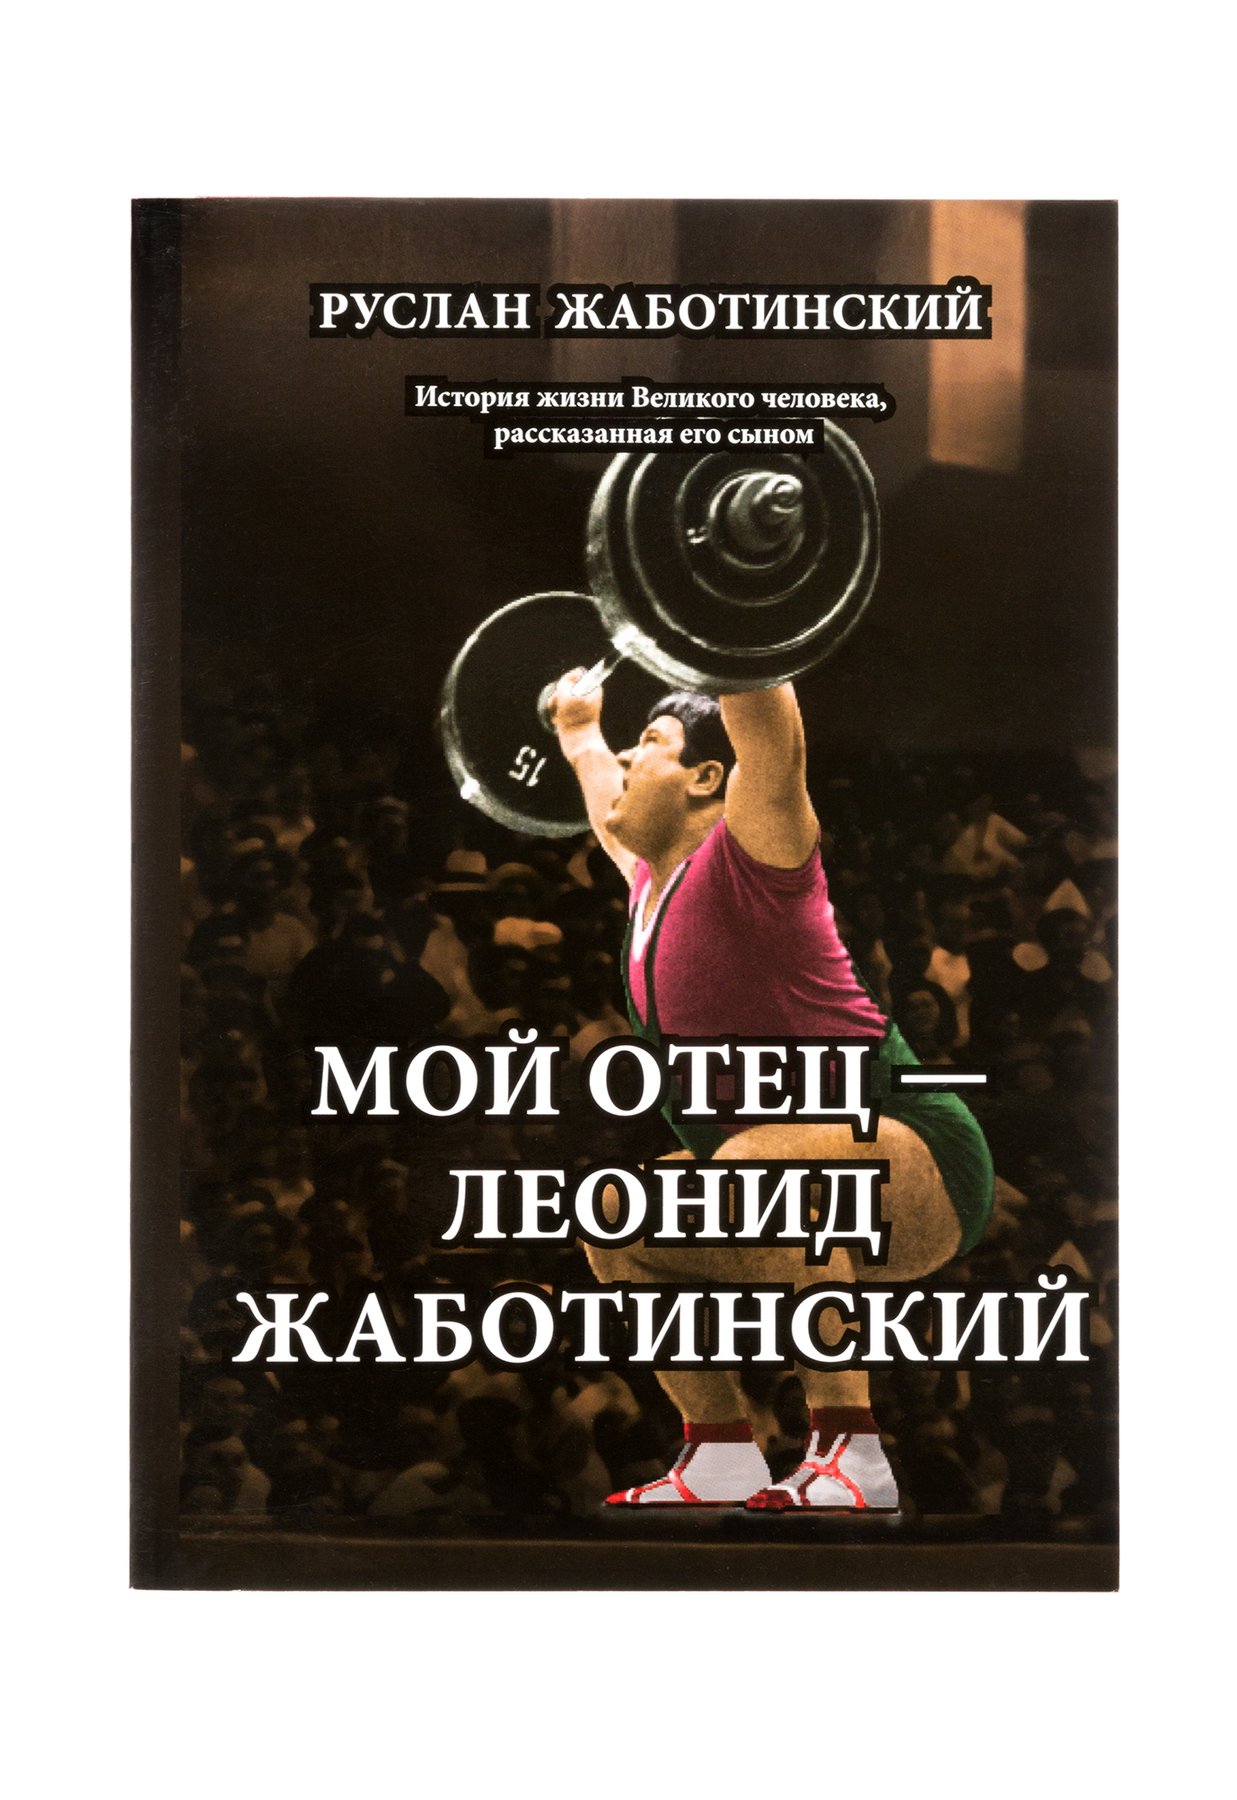 Book My father Leonid Zhabotinsky, printed book